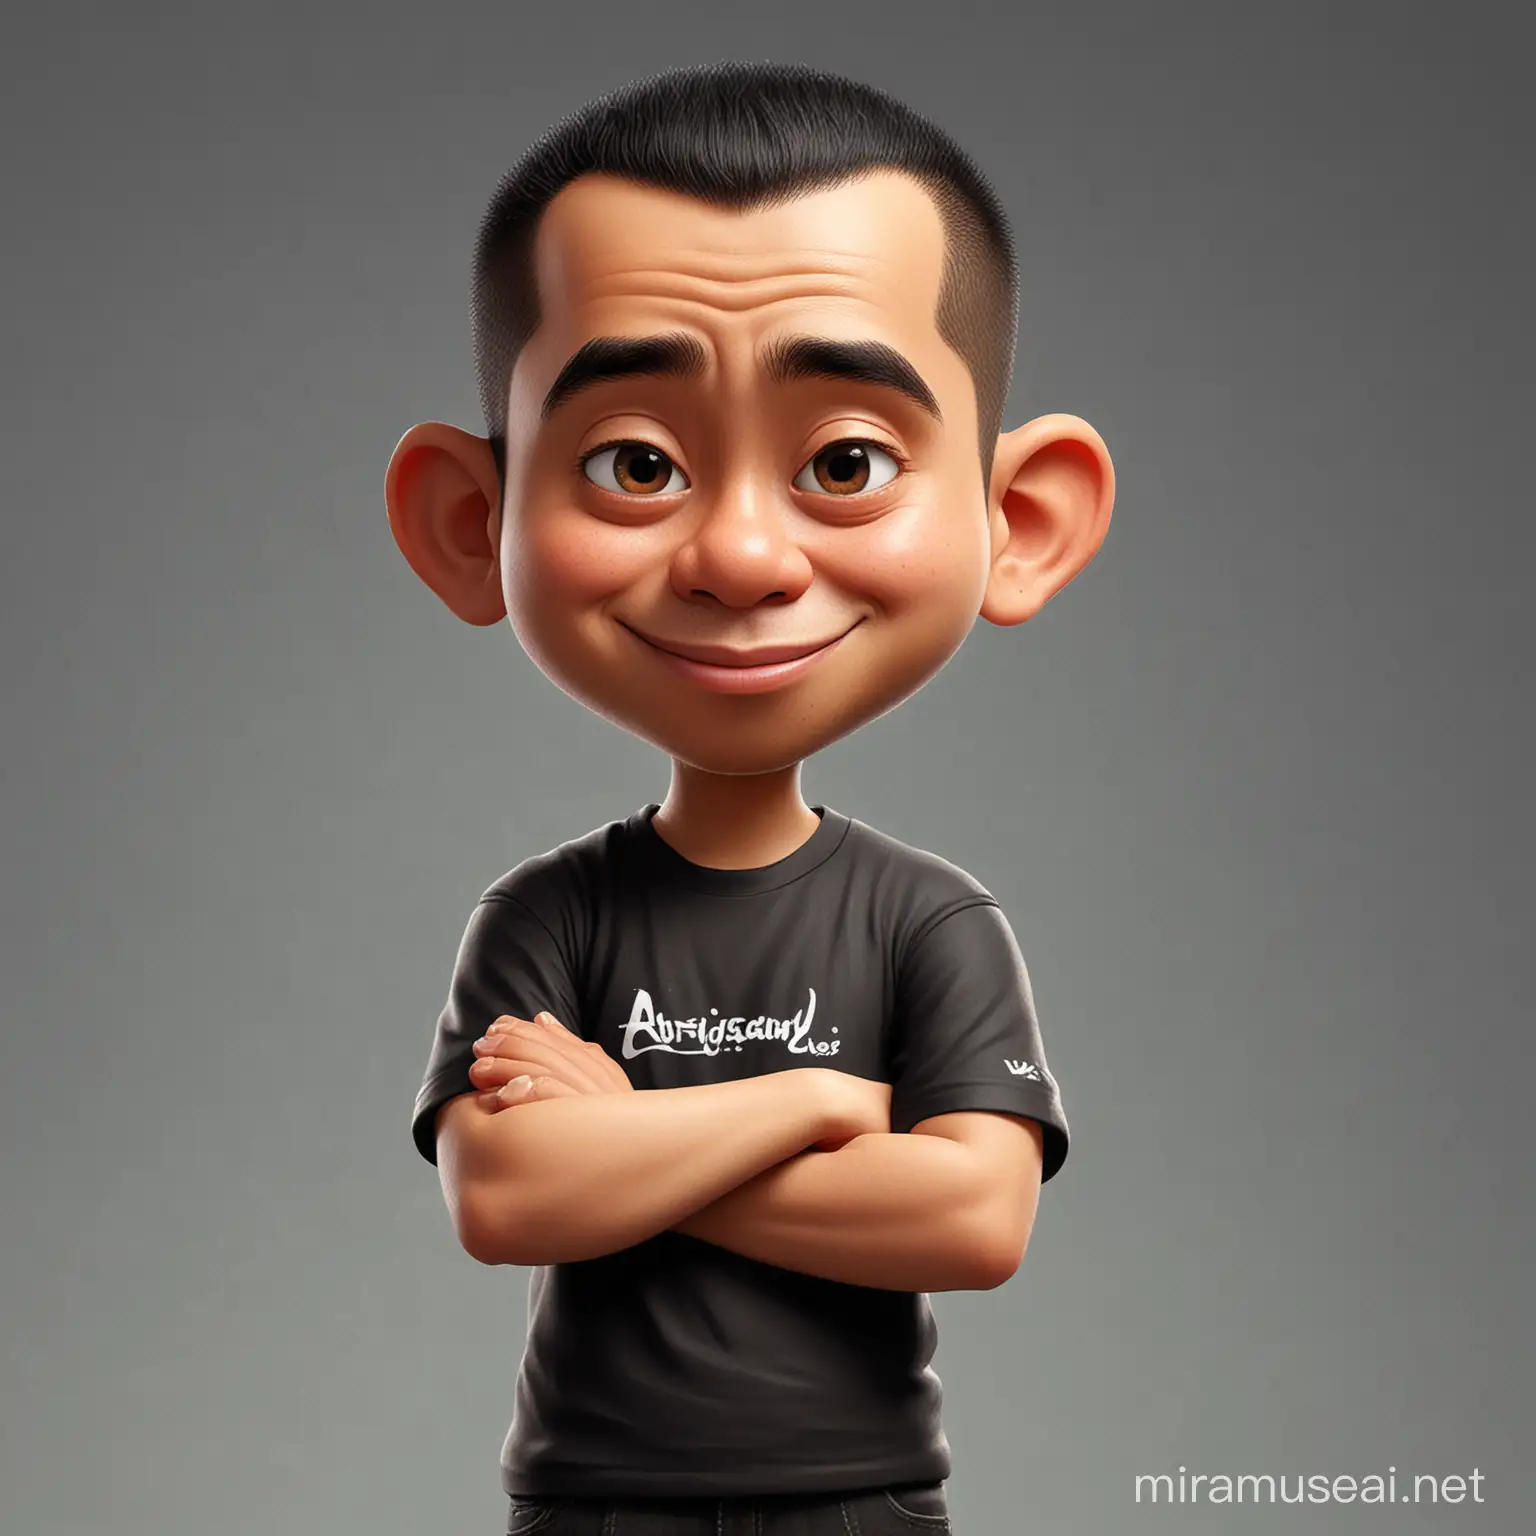 Indonesian Man Pixar Miniature with Buzz Cut in Casual Black TShirt